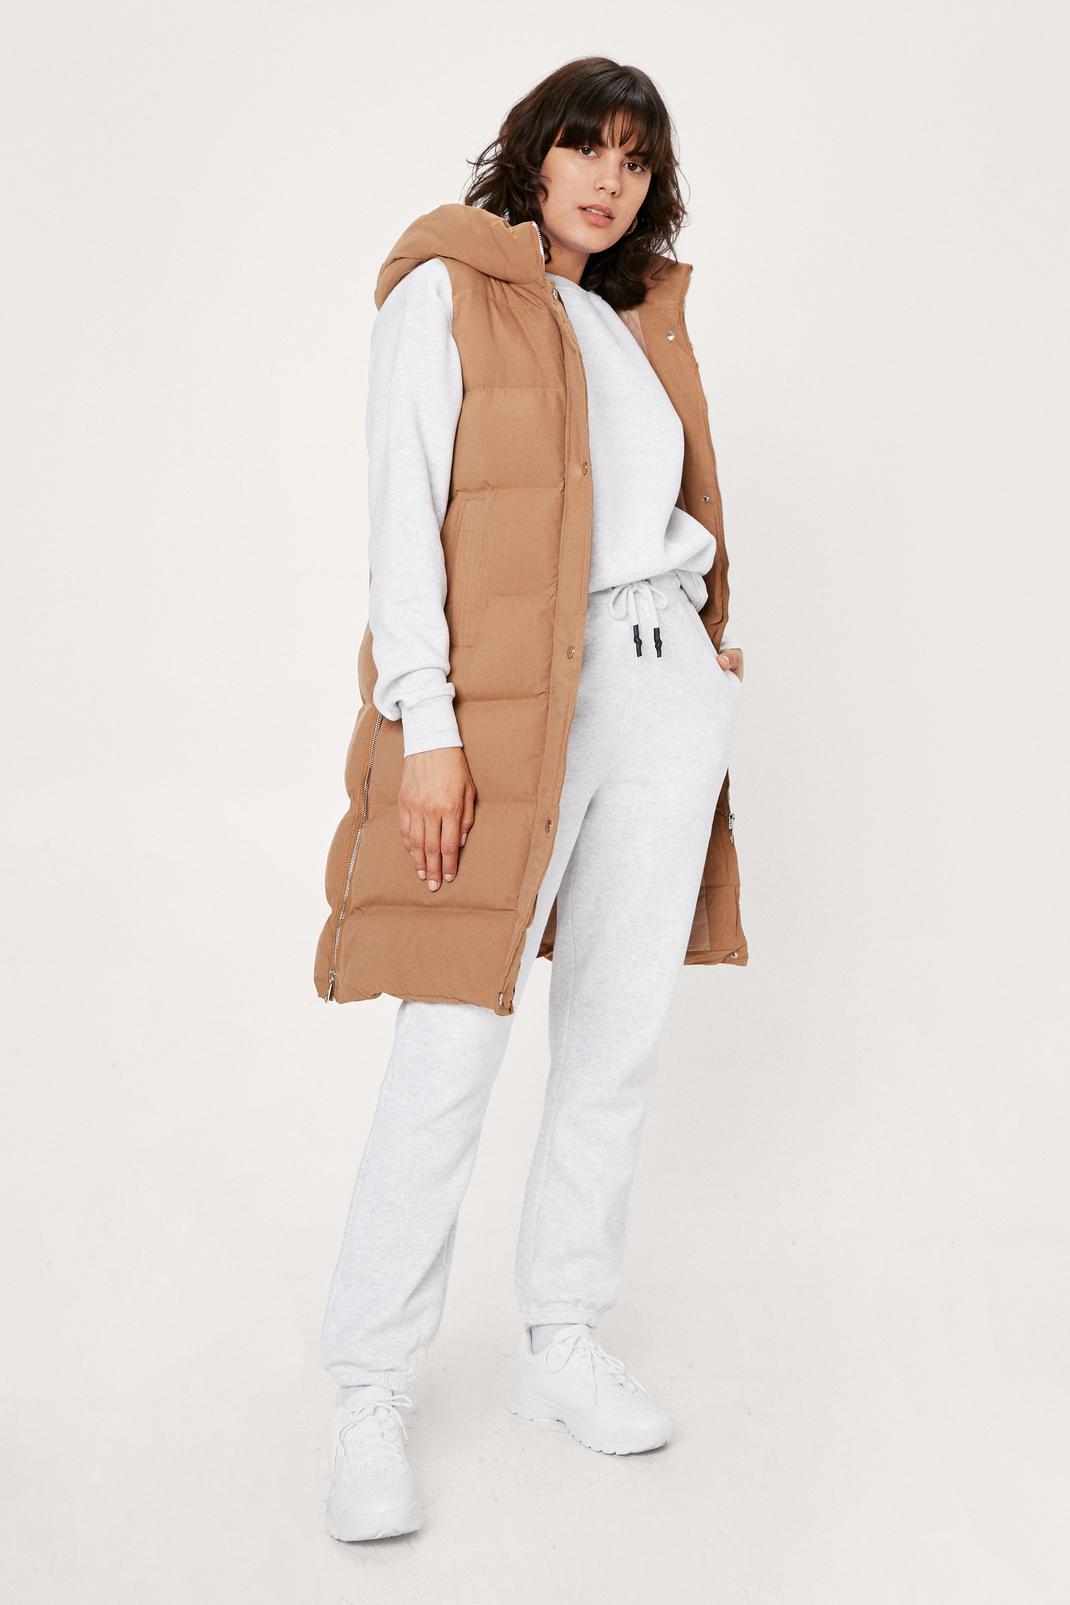 Boutique Store Womens Fashion White Padded Longline Hooded Sleeveless Gilet